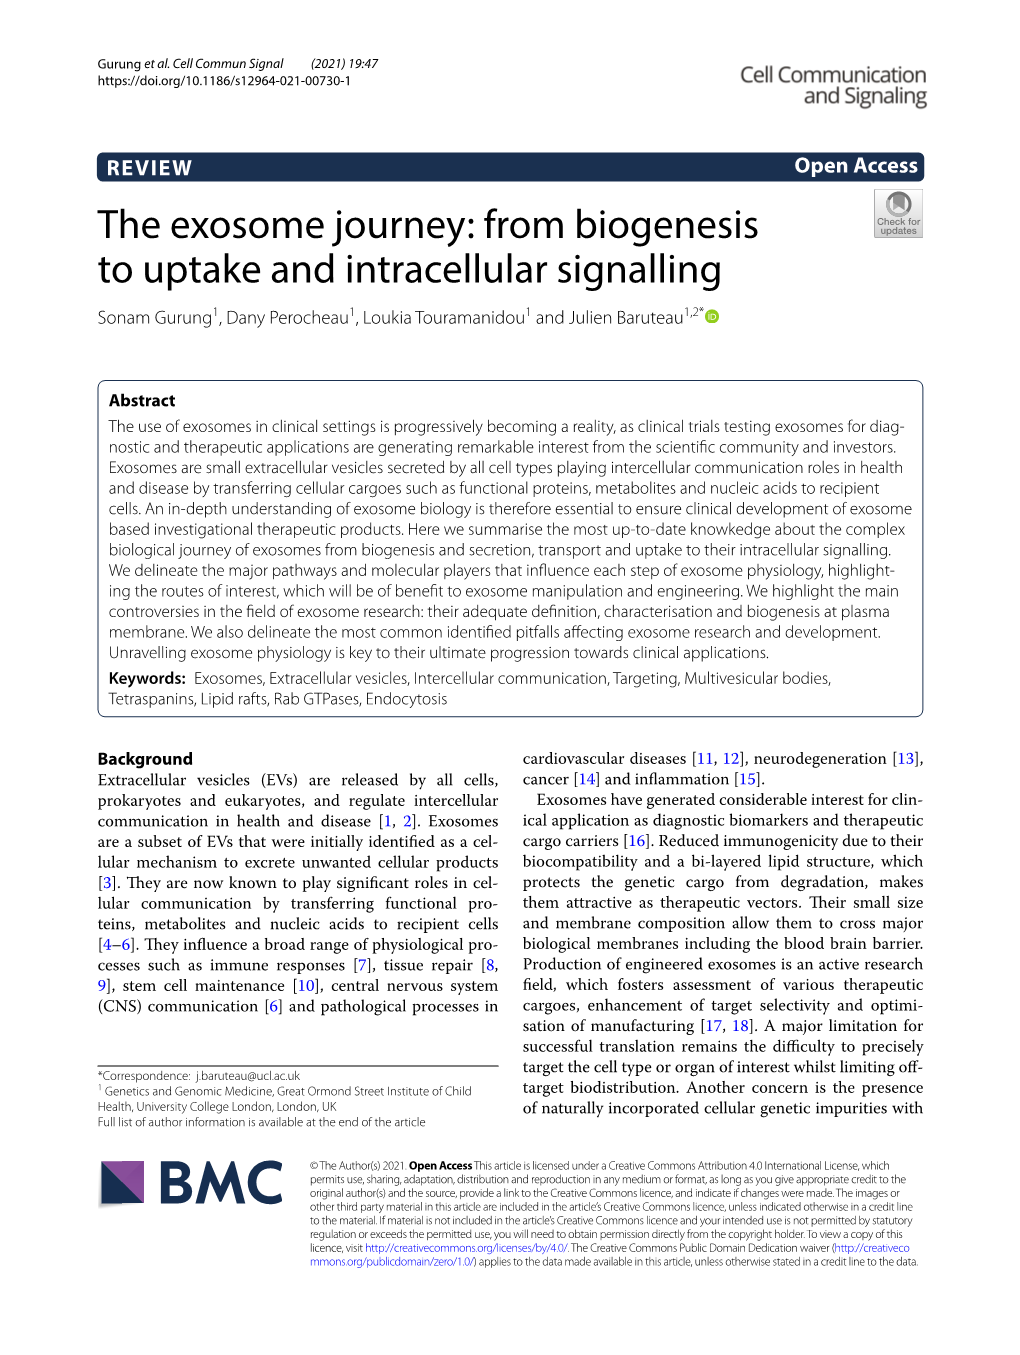 The Exosome Journey: from Biogenesis to Uptake and Intracellular Signalling Sonam Gurung1, Dany Perocheau1, Loukia Touramanidou1 and Julien Baruteau1,2*